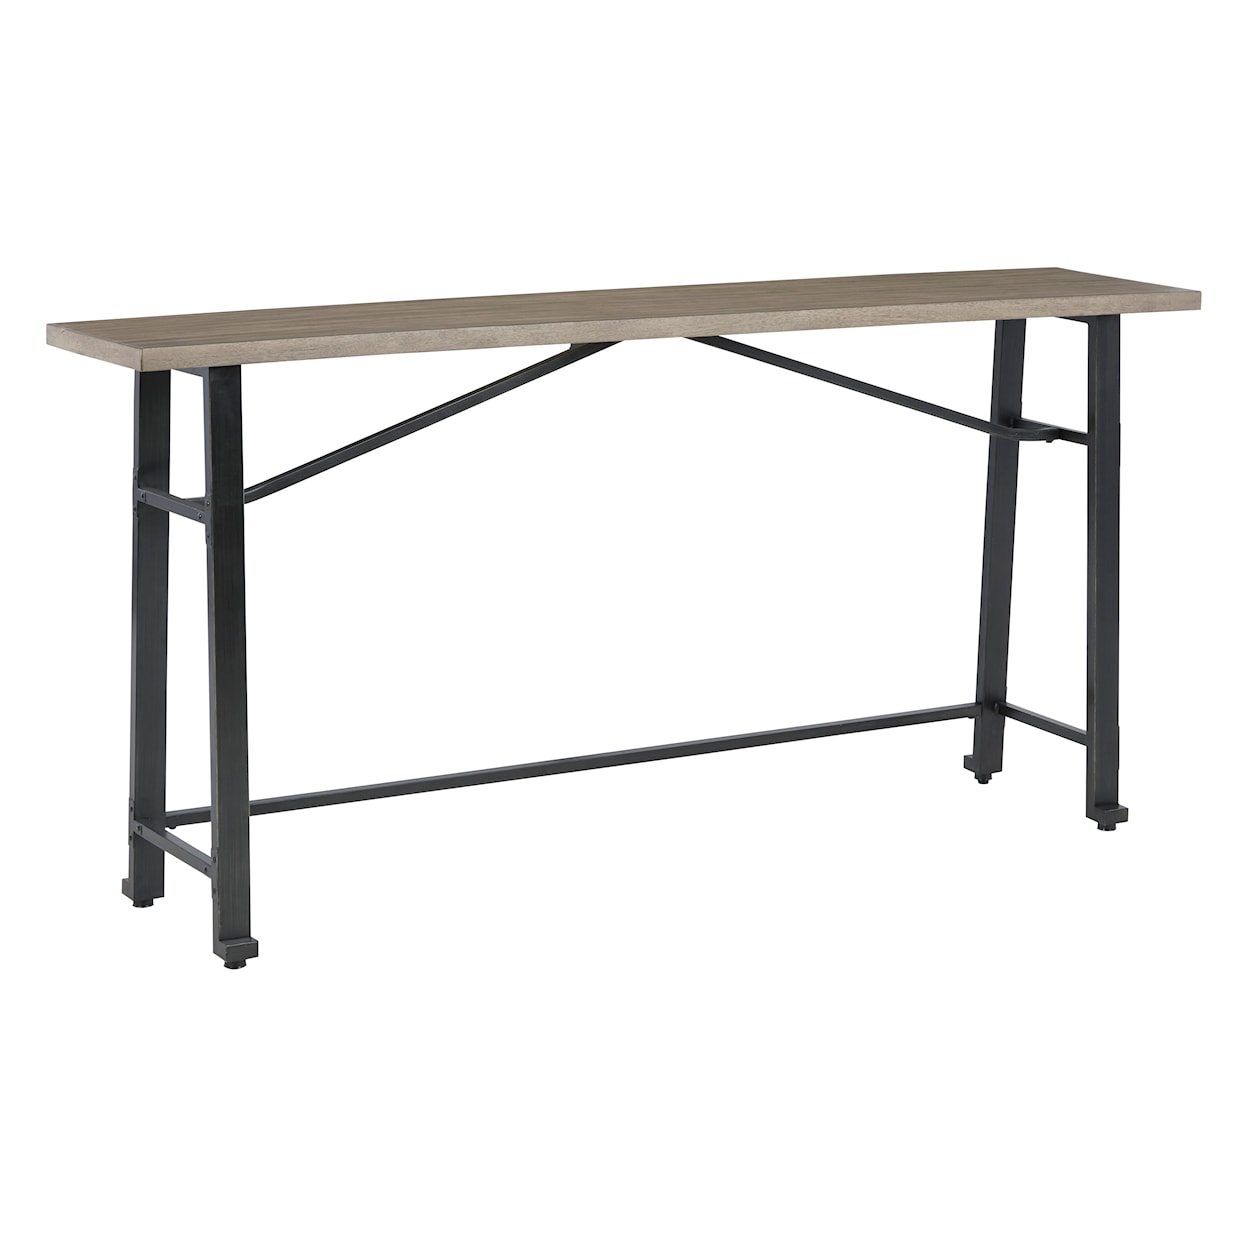 Benchcraft Lesterton 3-Piece Counter Table Set